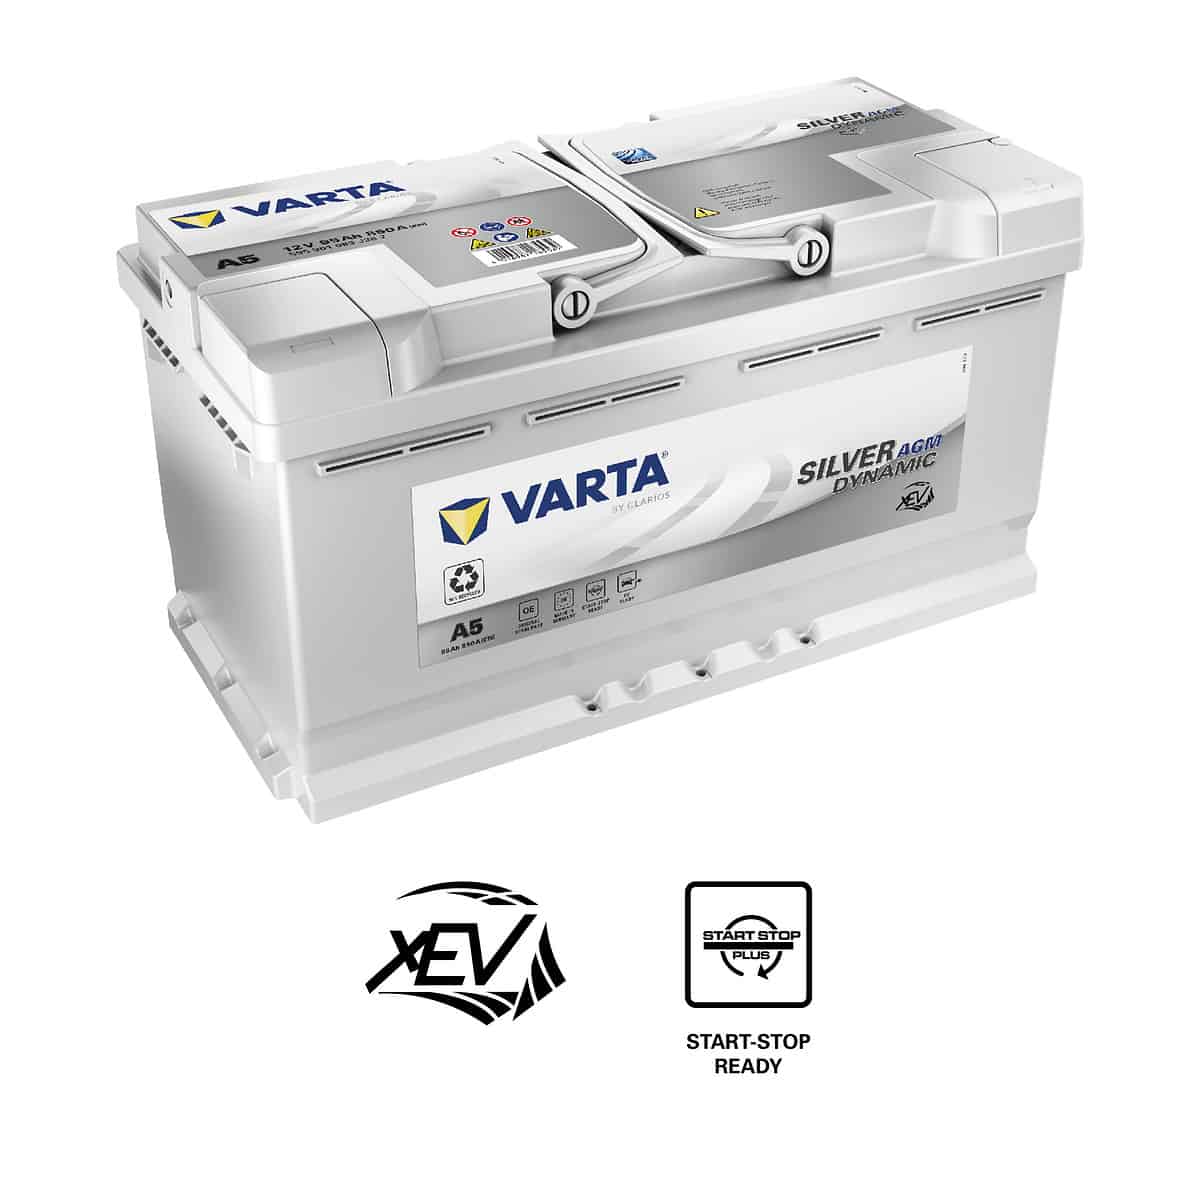 Акумулатор VARTA Silver Dynamic AGM 595 901 085 95AH 850A R+